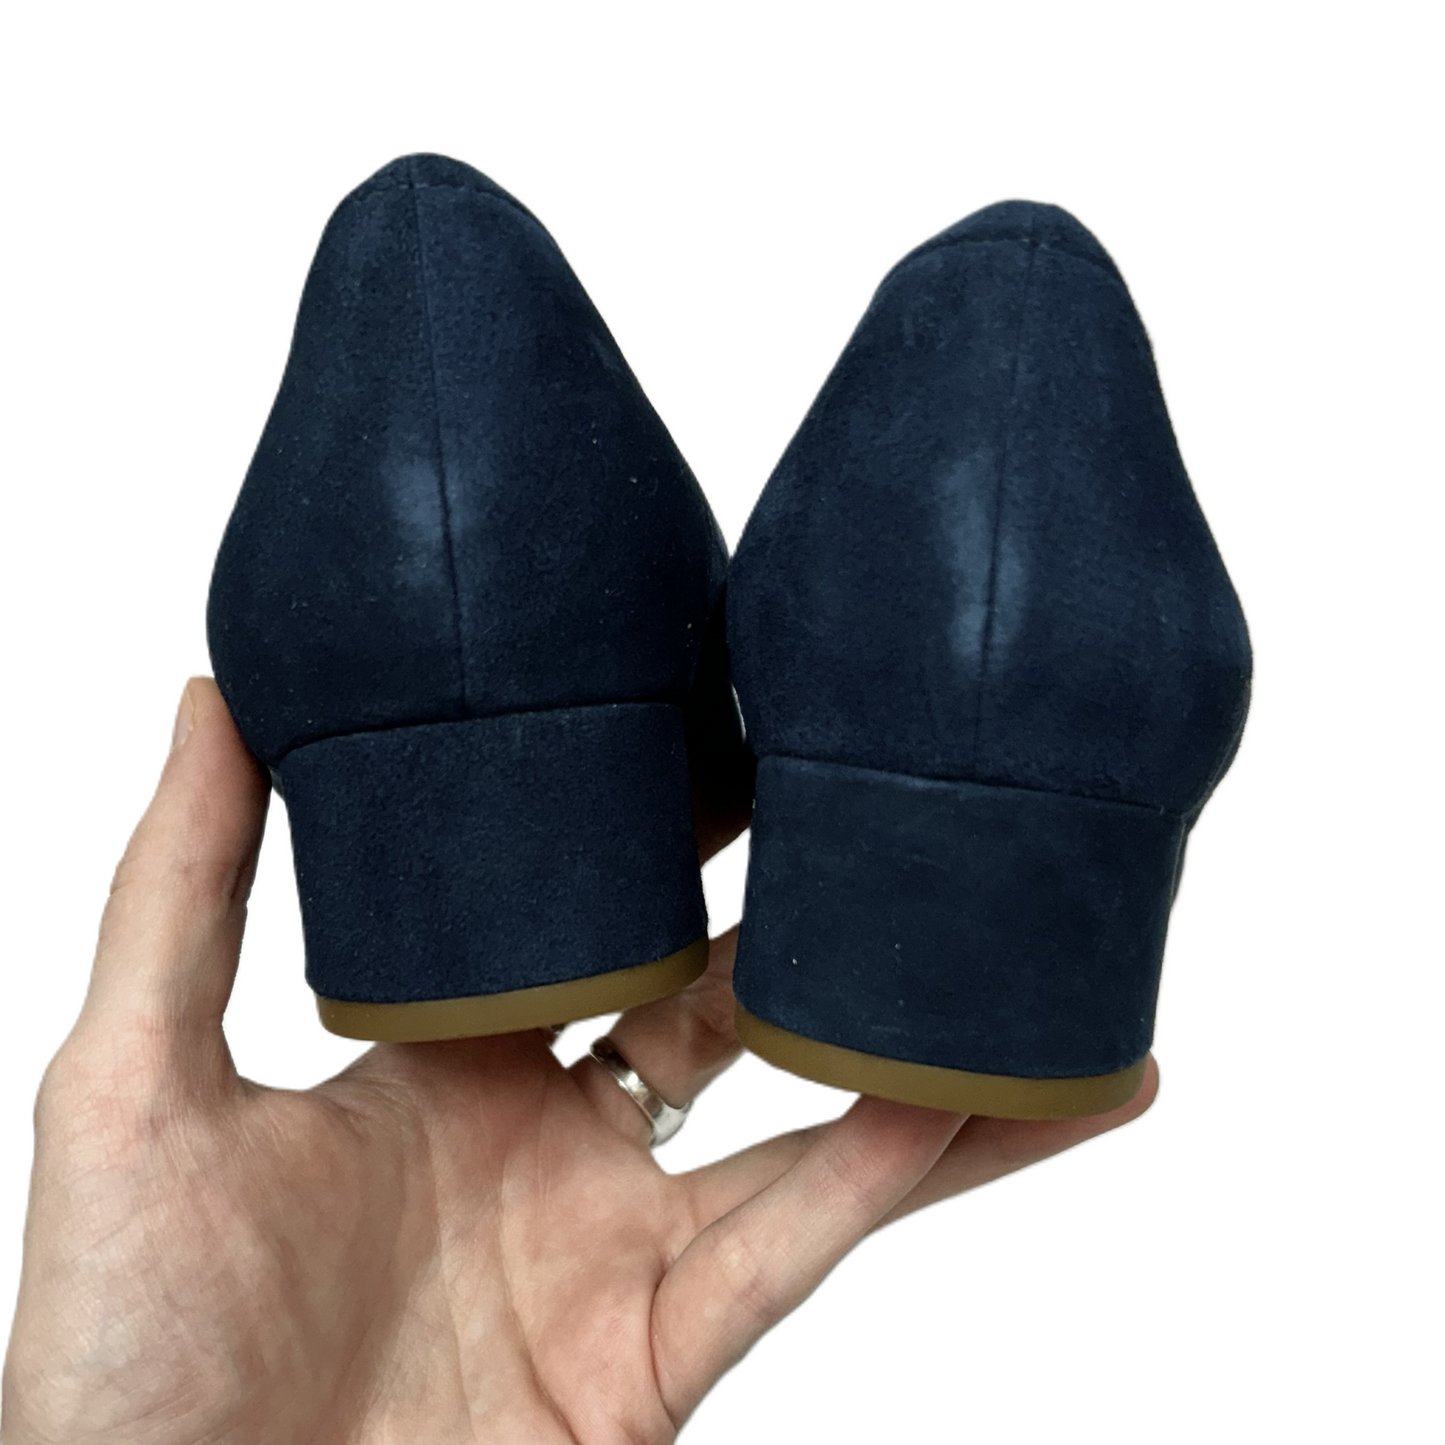 Navy Shoes Heels Block By Franco Sarto, Size: 8